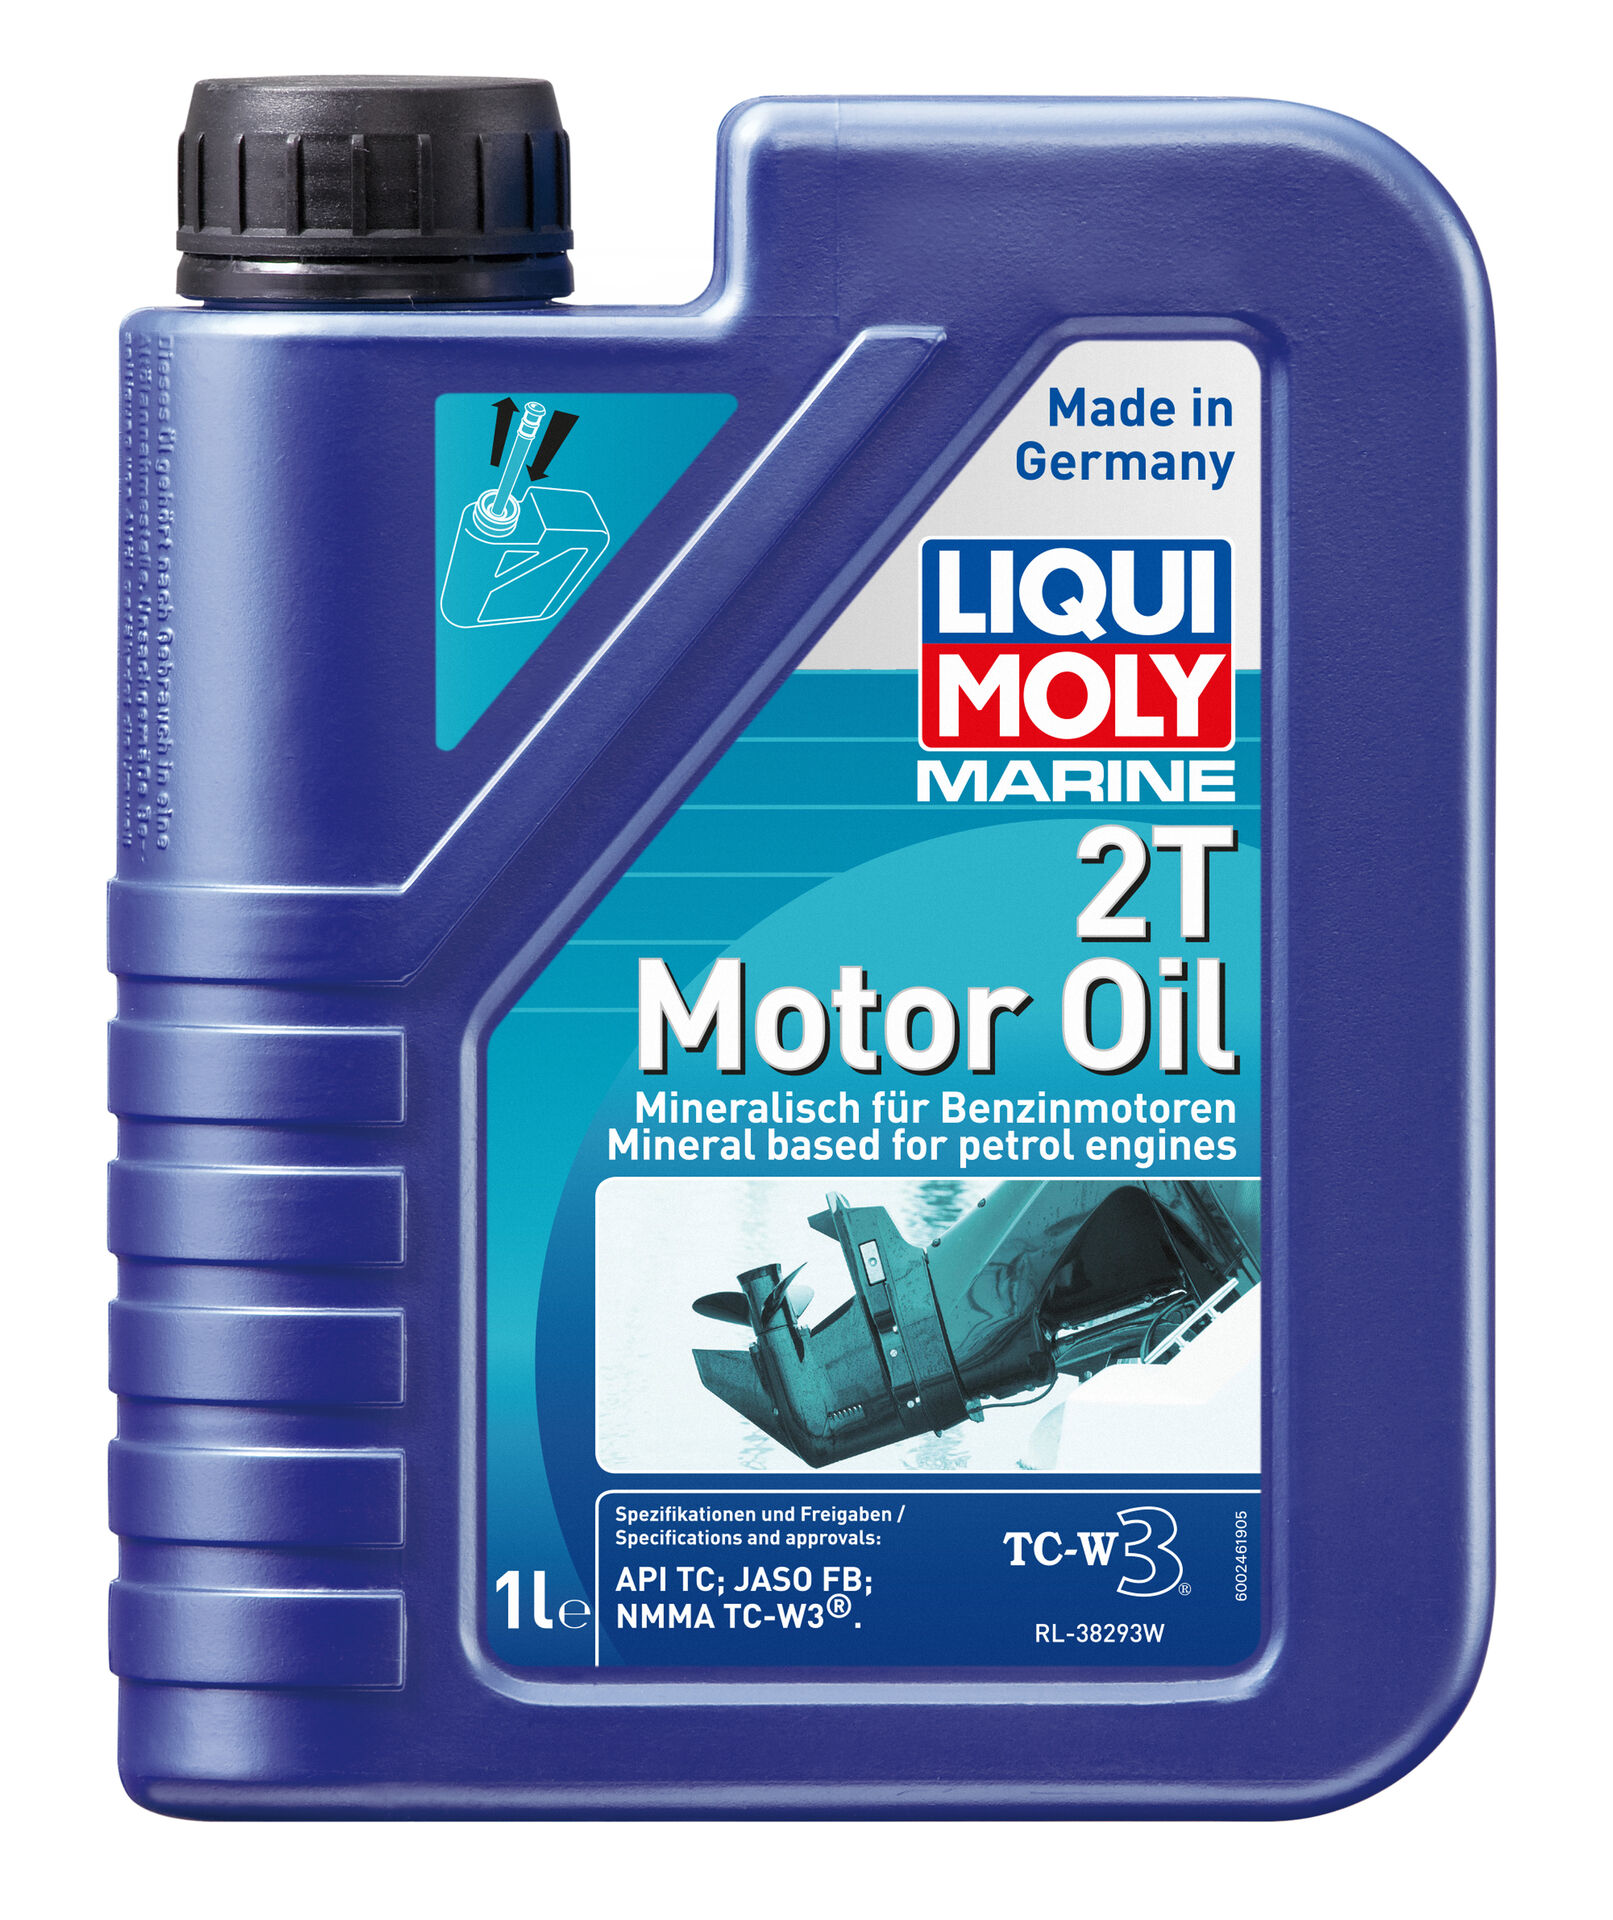 Liqui Moly Marine 2T Motor Oil Motorrad Motoröl API TC JASO FB 1L